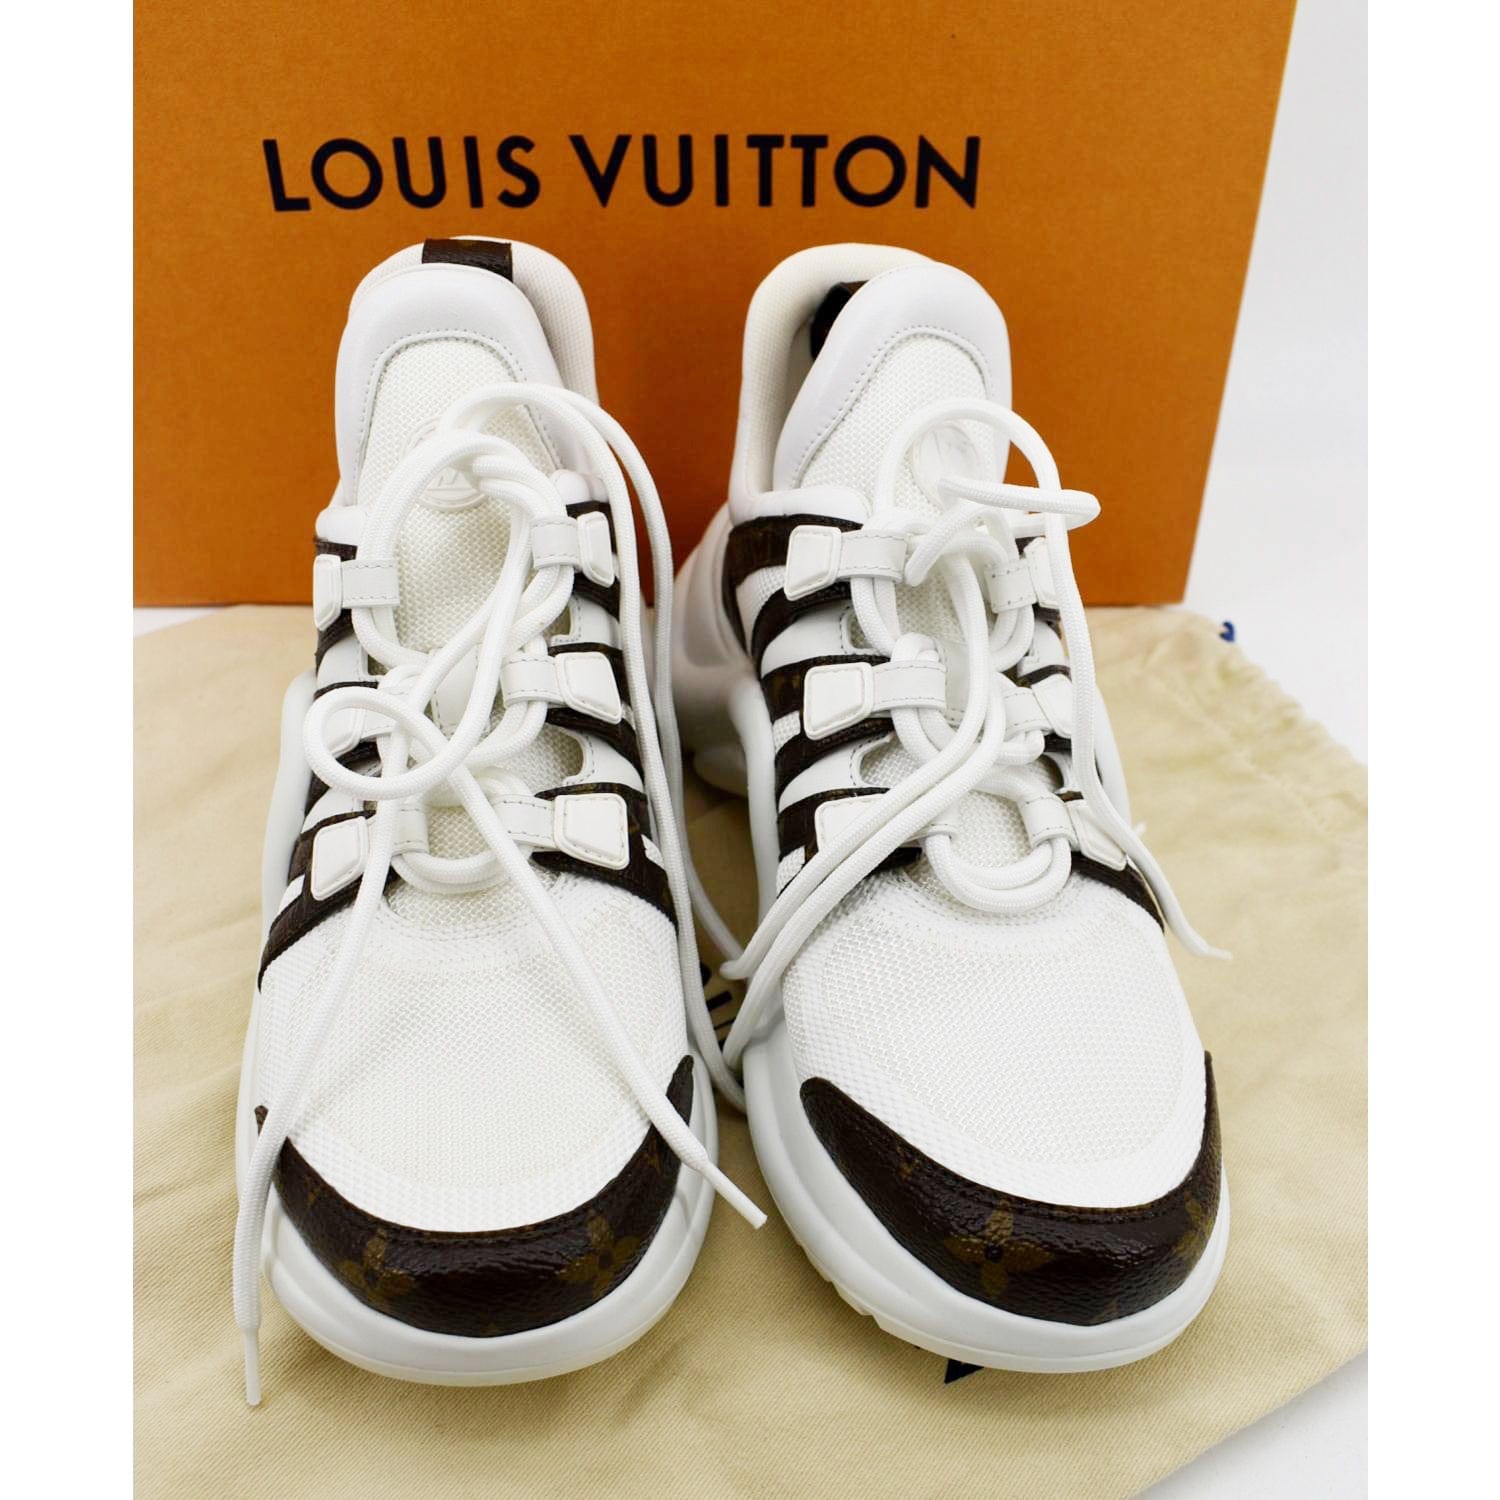 Men's Louis Vuitton Boots from $940